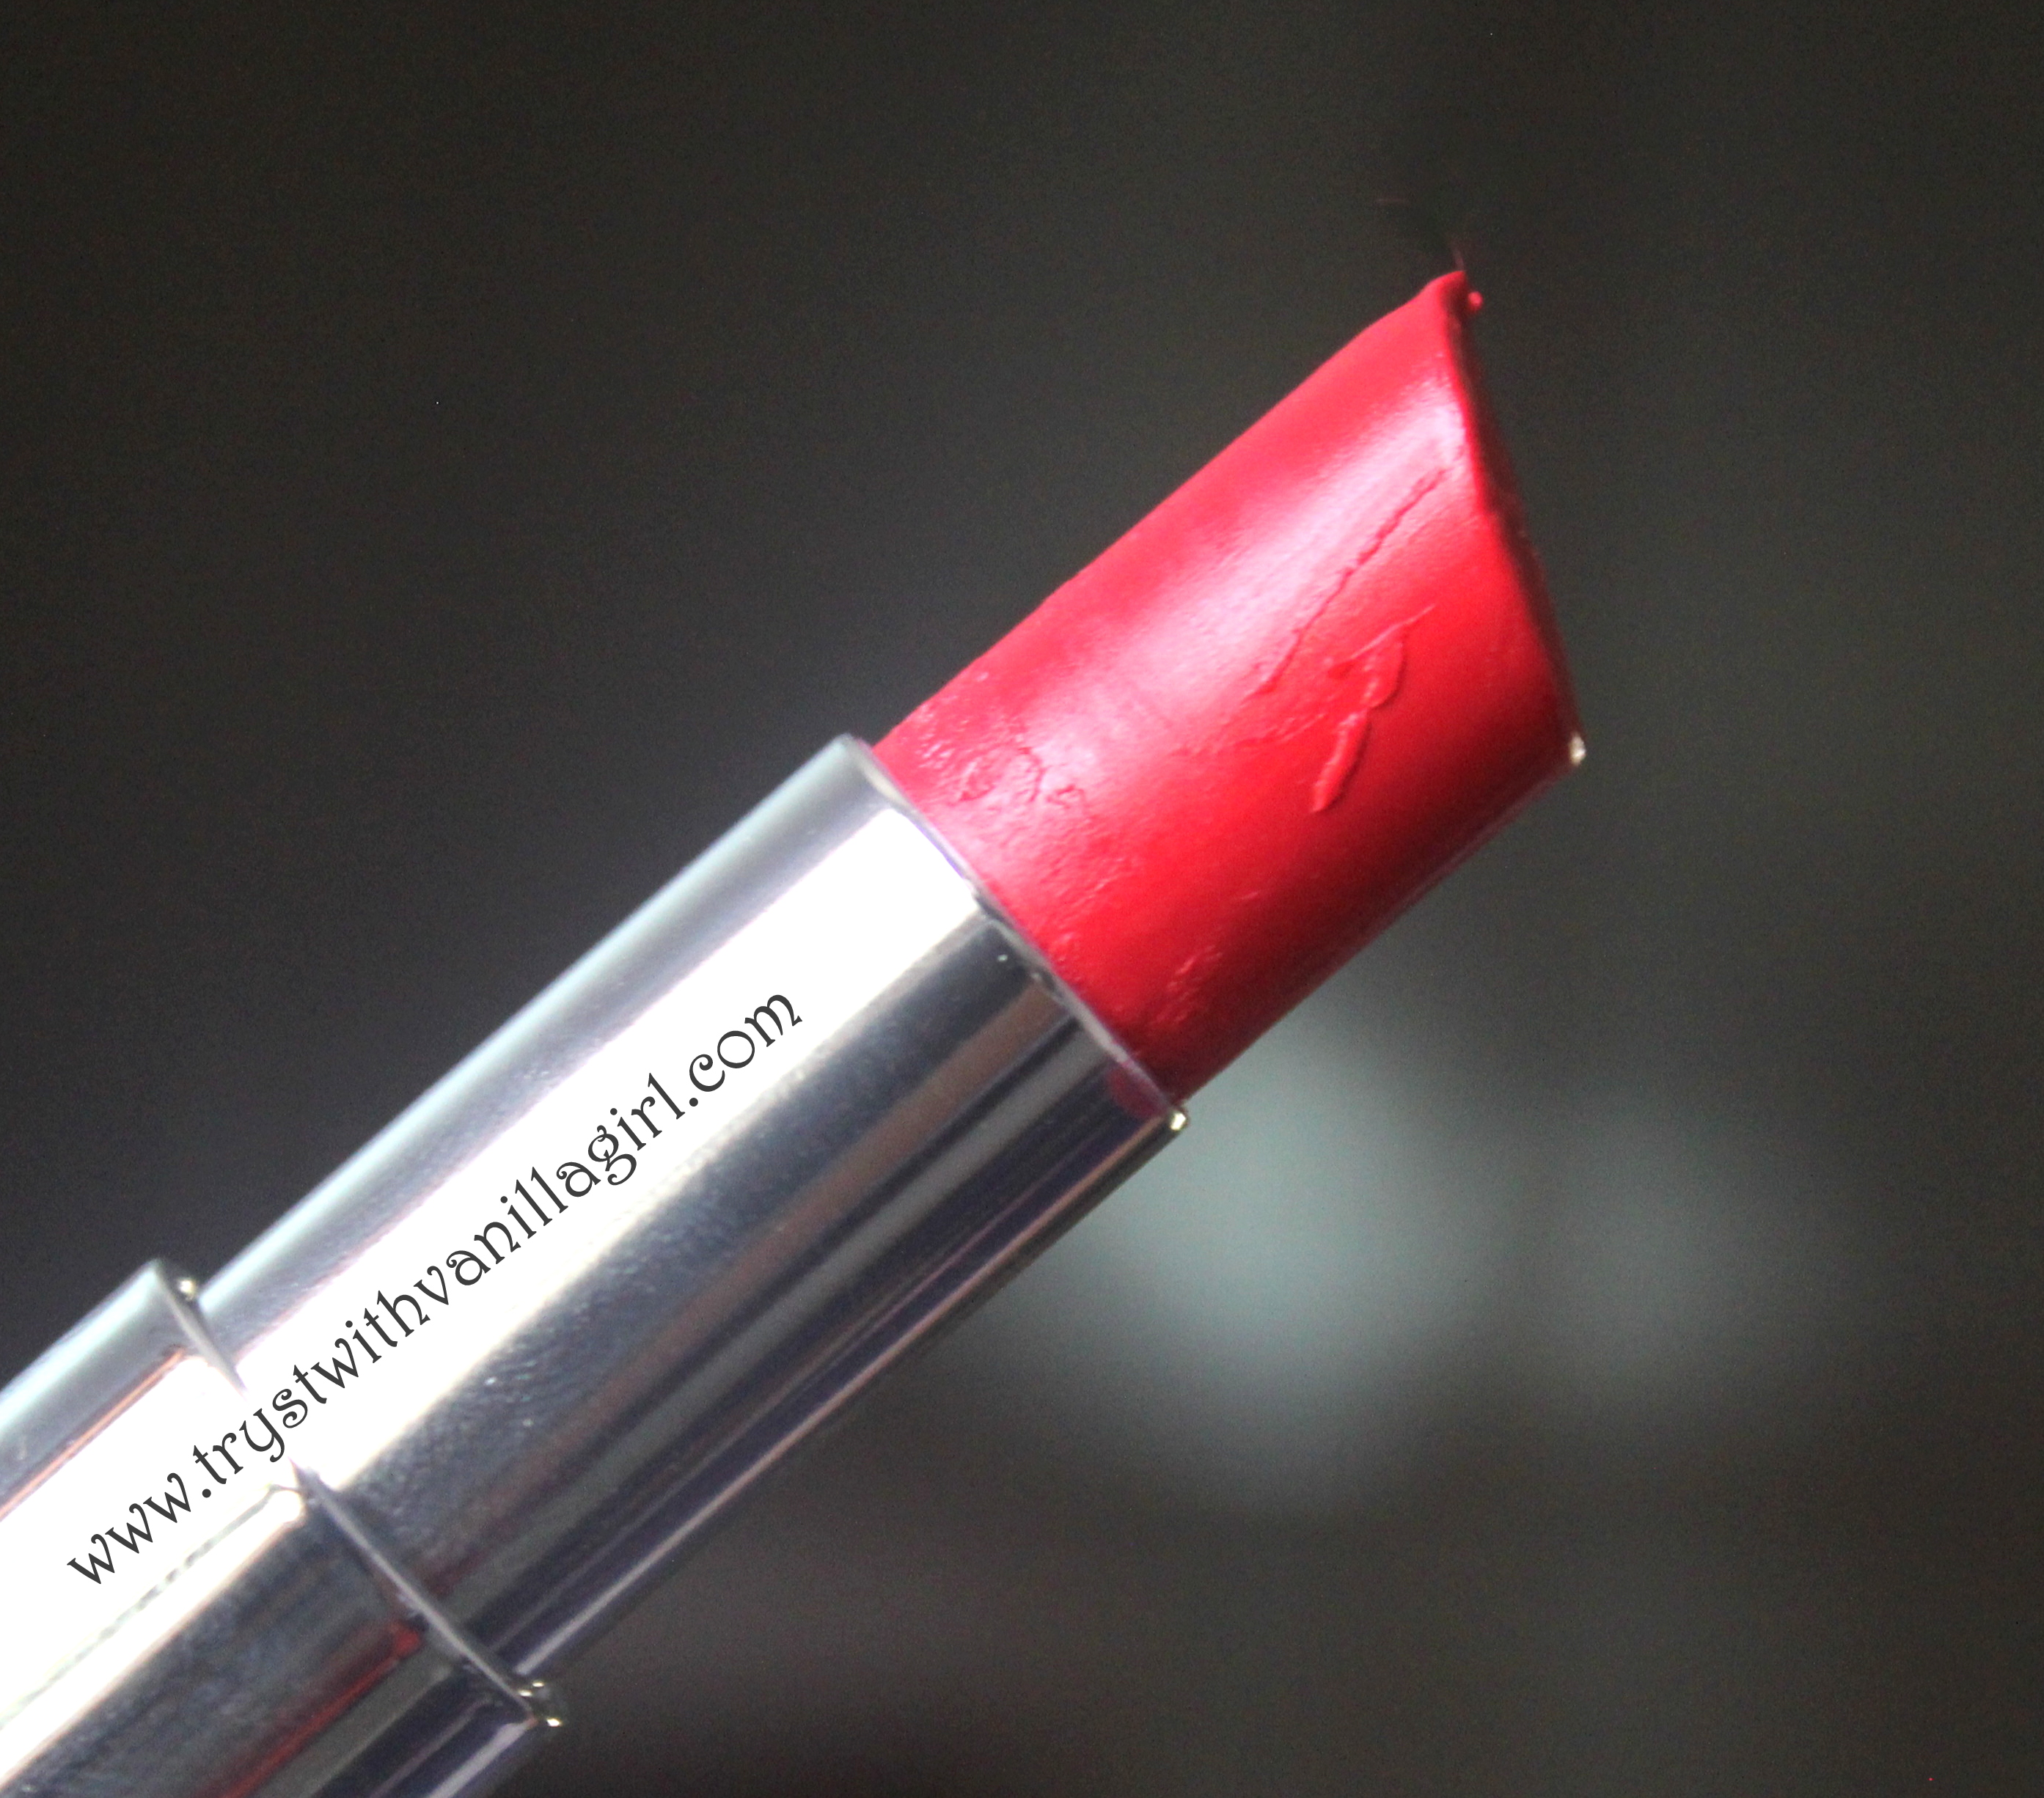 Revlon Ultra HD Lipstick Poinsettia Review, Swatch, Photos